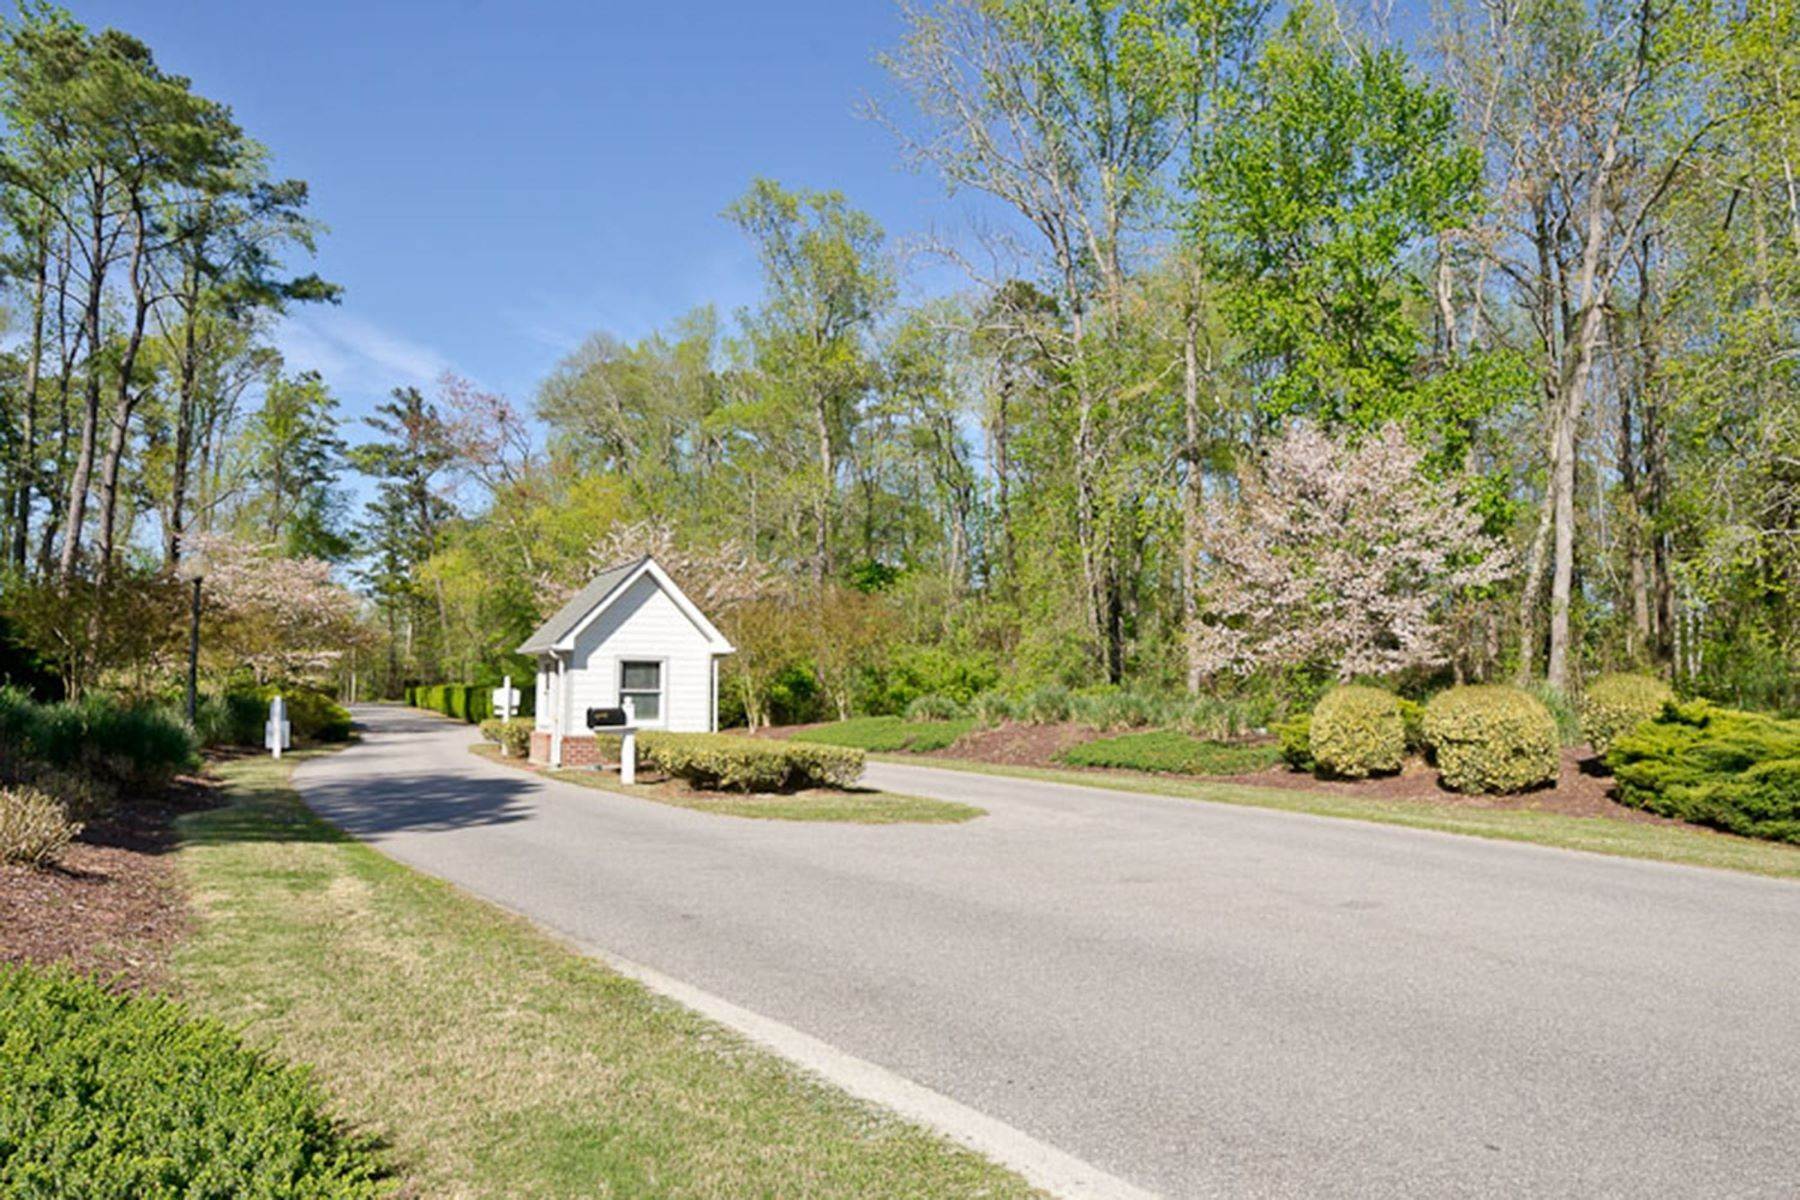 38. Single Family Homes for Sale at SOUTHERN SURPRISE! 108 Schooner Landing Dr Edenton, North Carolina 27932 United States